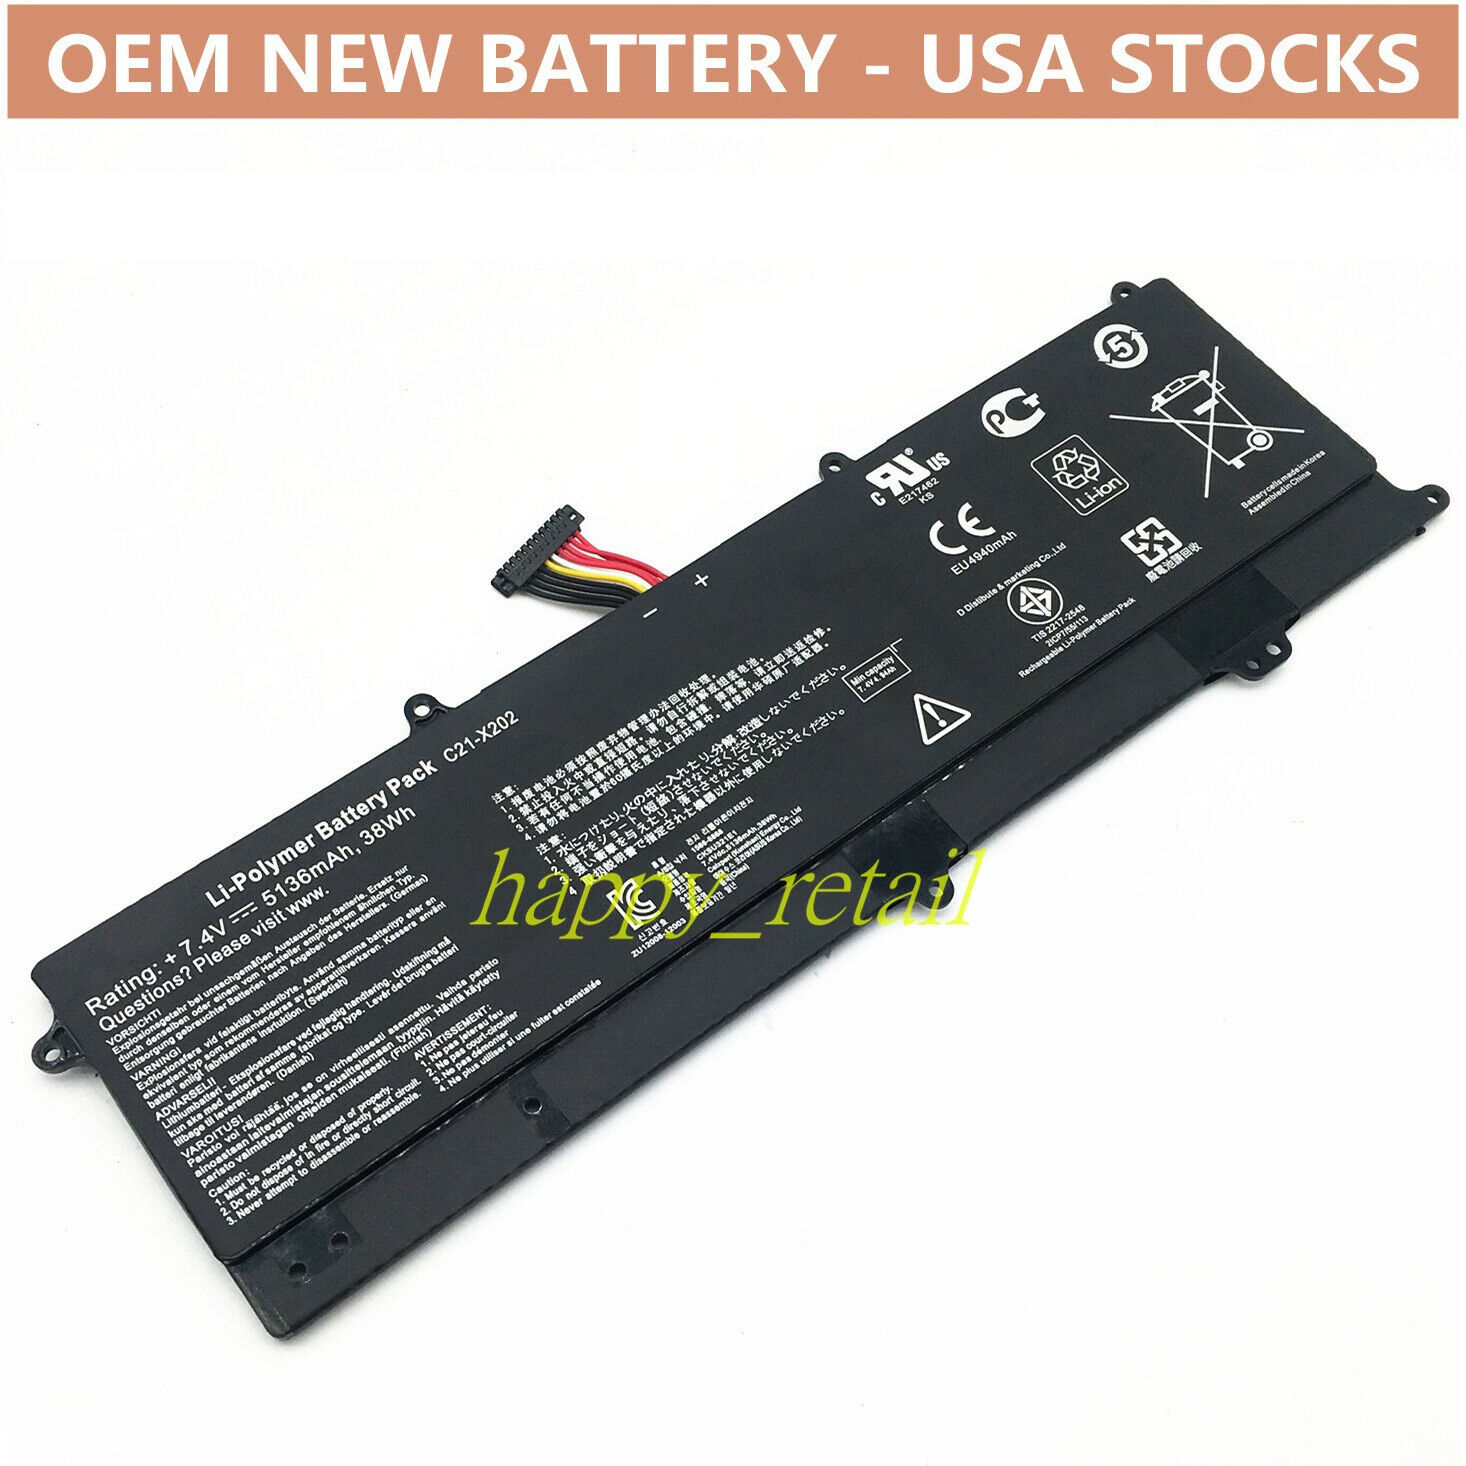 OEM New Battery C21-X202 for ASUS VivoBook X202 X202E X201E S200E Q200E Series